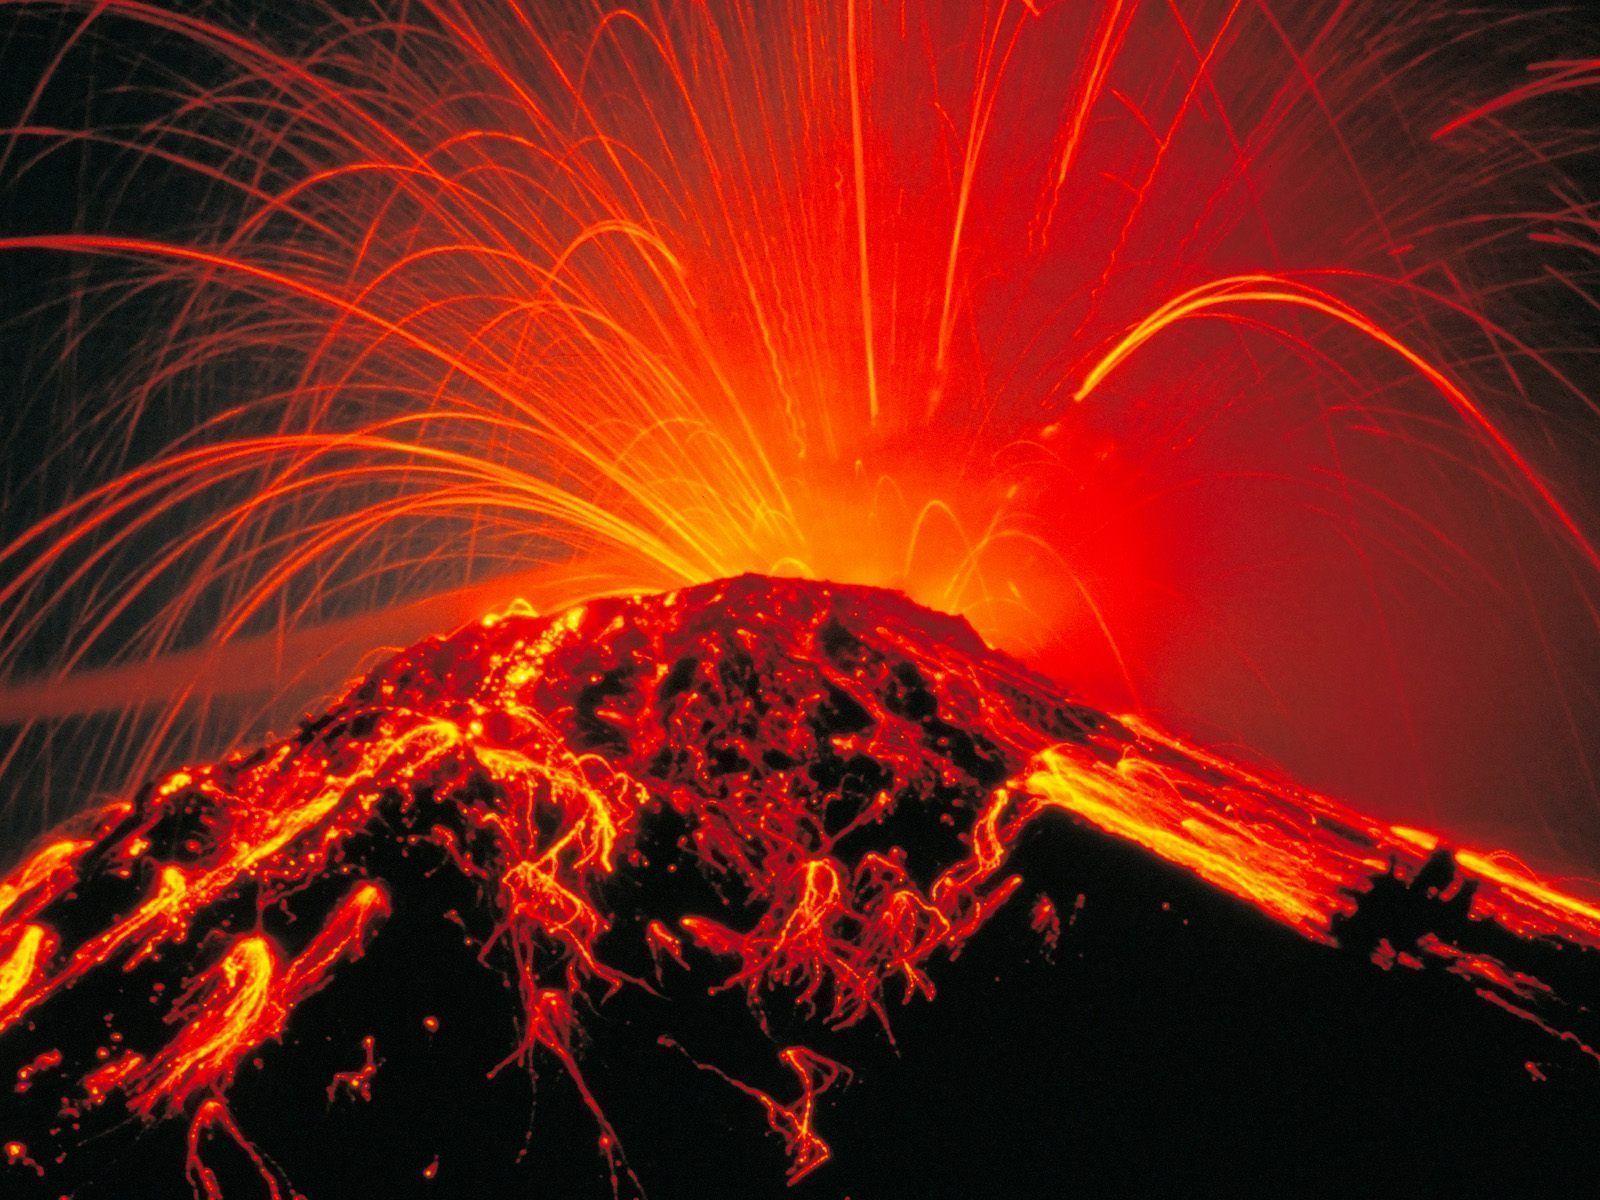 Download Volcano Lava wallpaper, burst lava volcano image. High